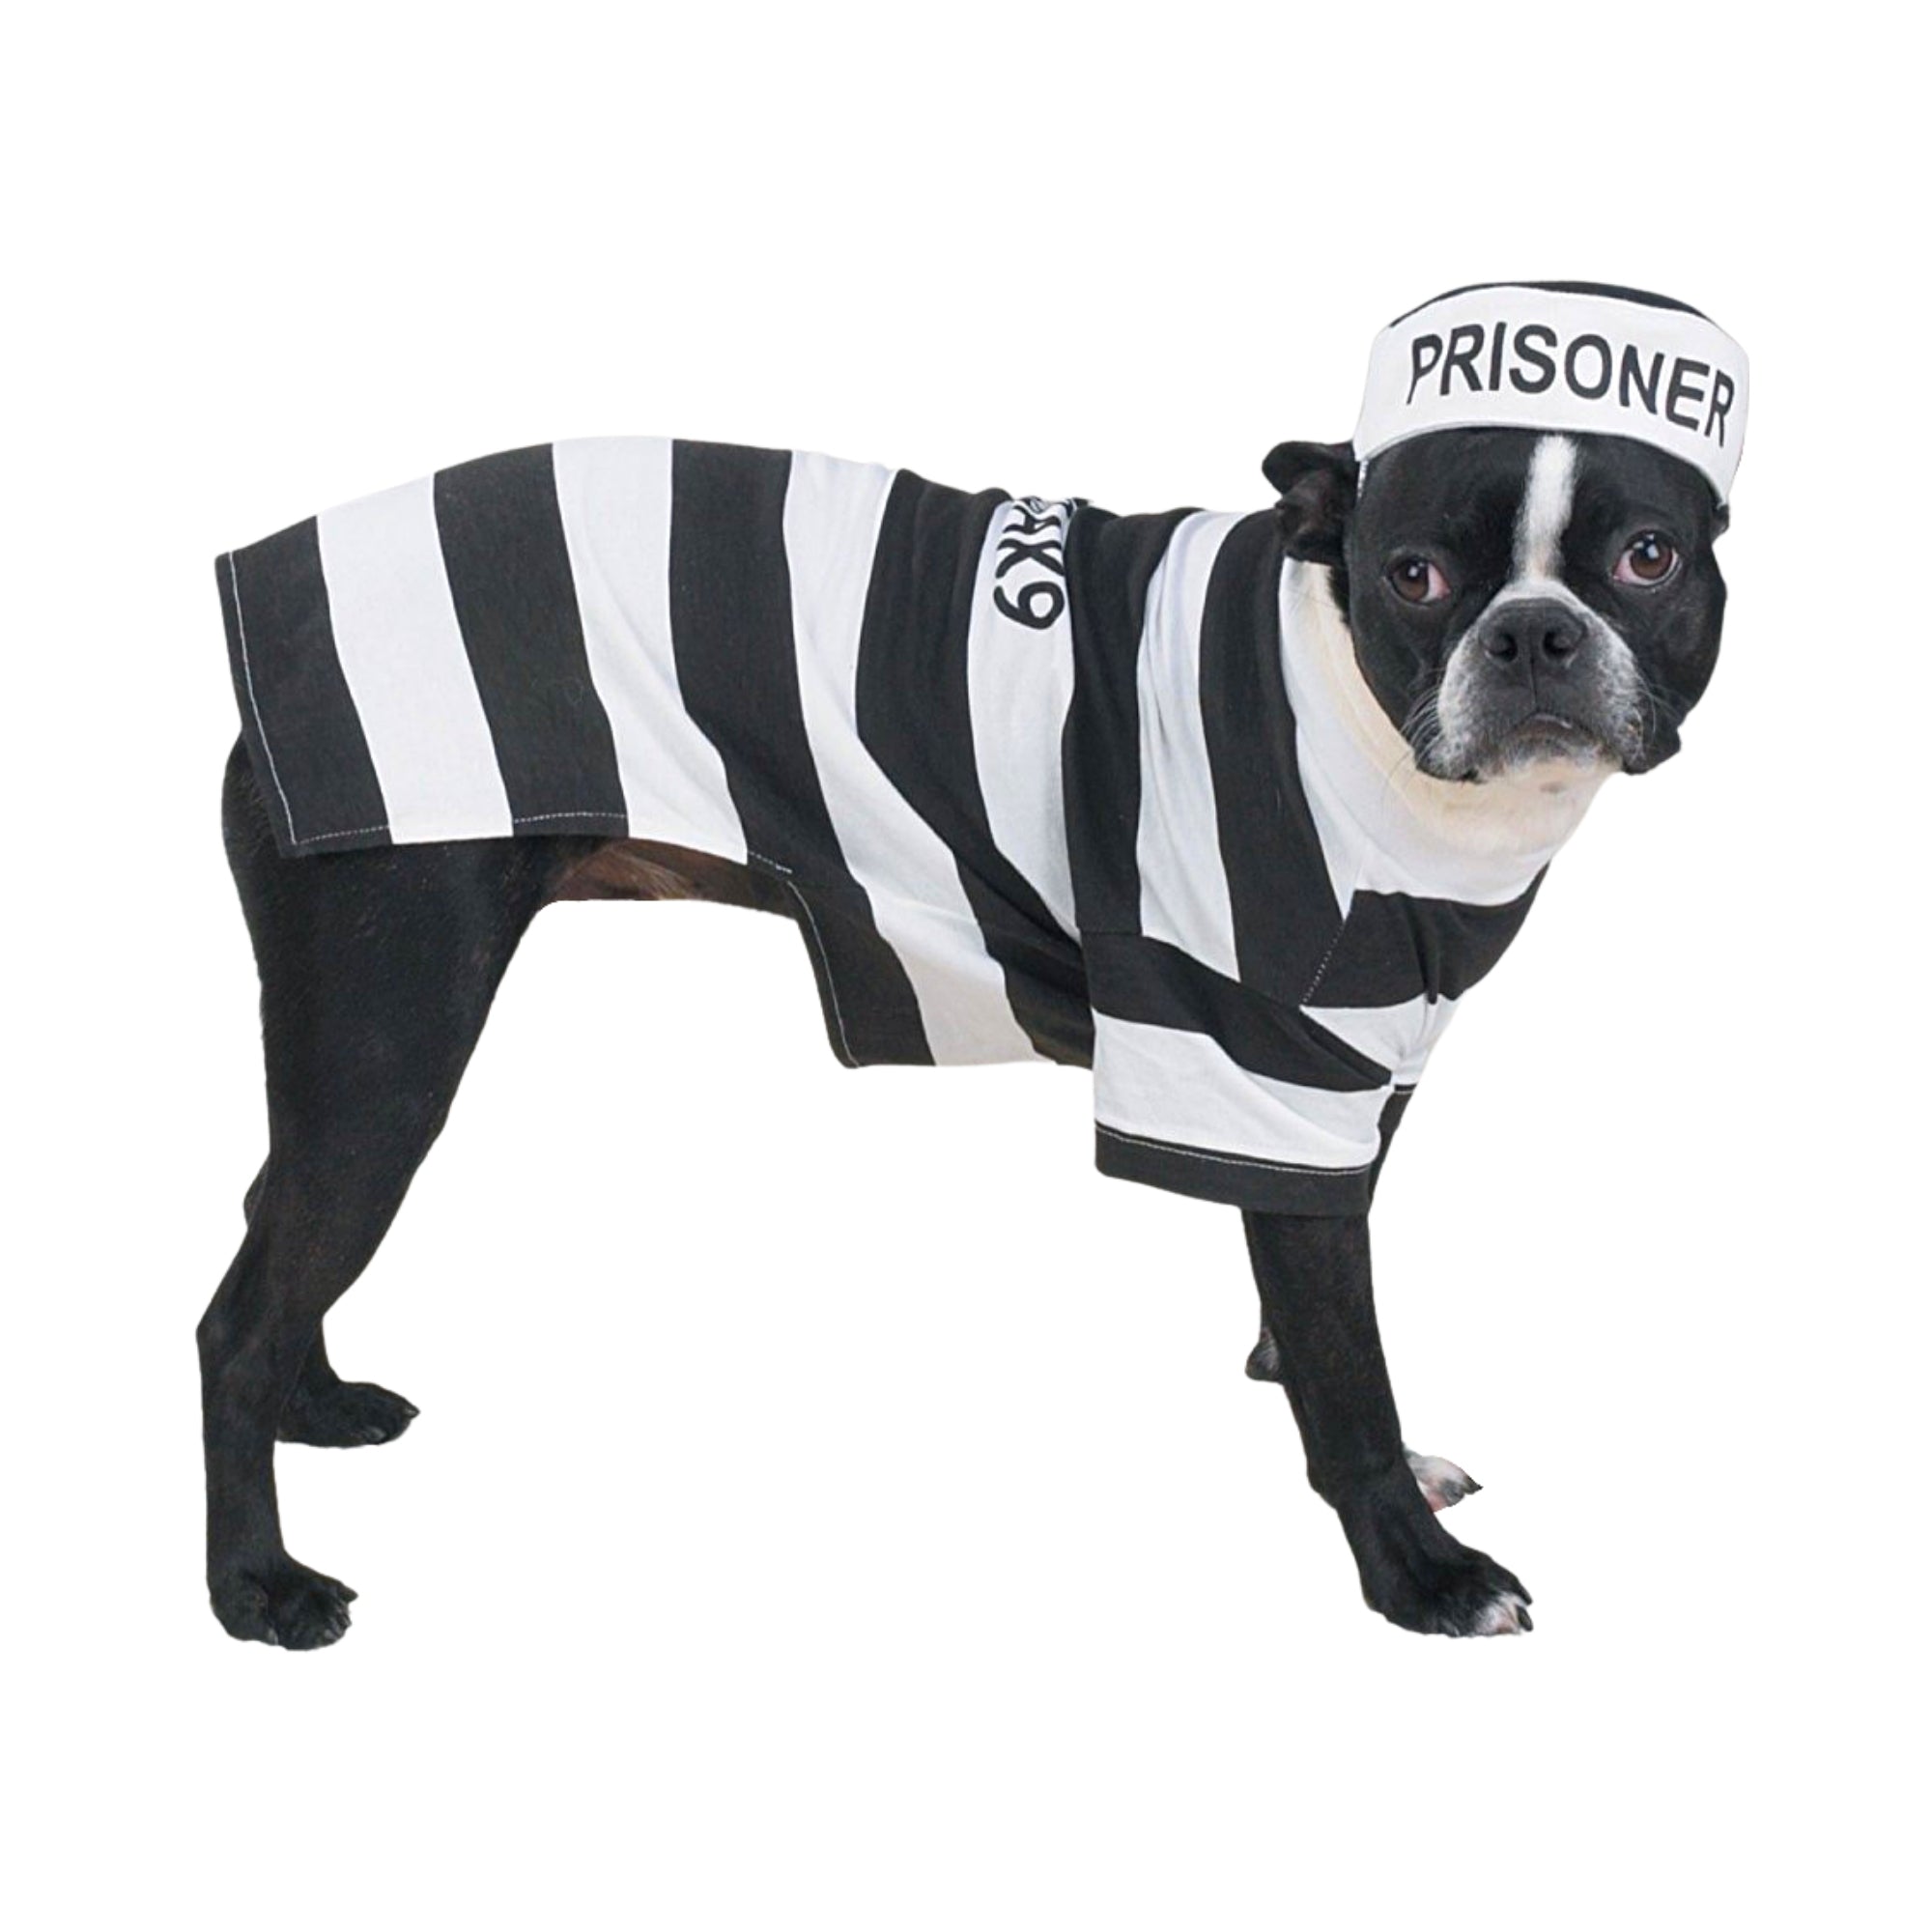 Casual Canine Prison Pooch Costume, Small